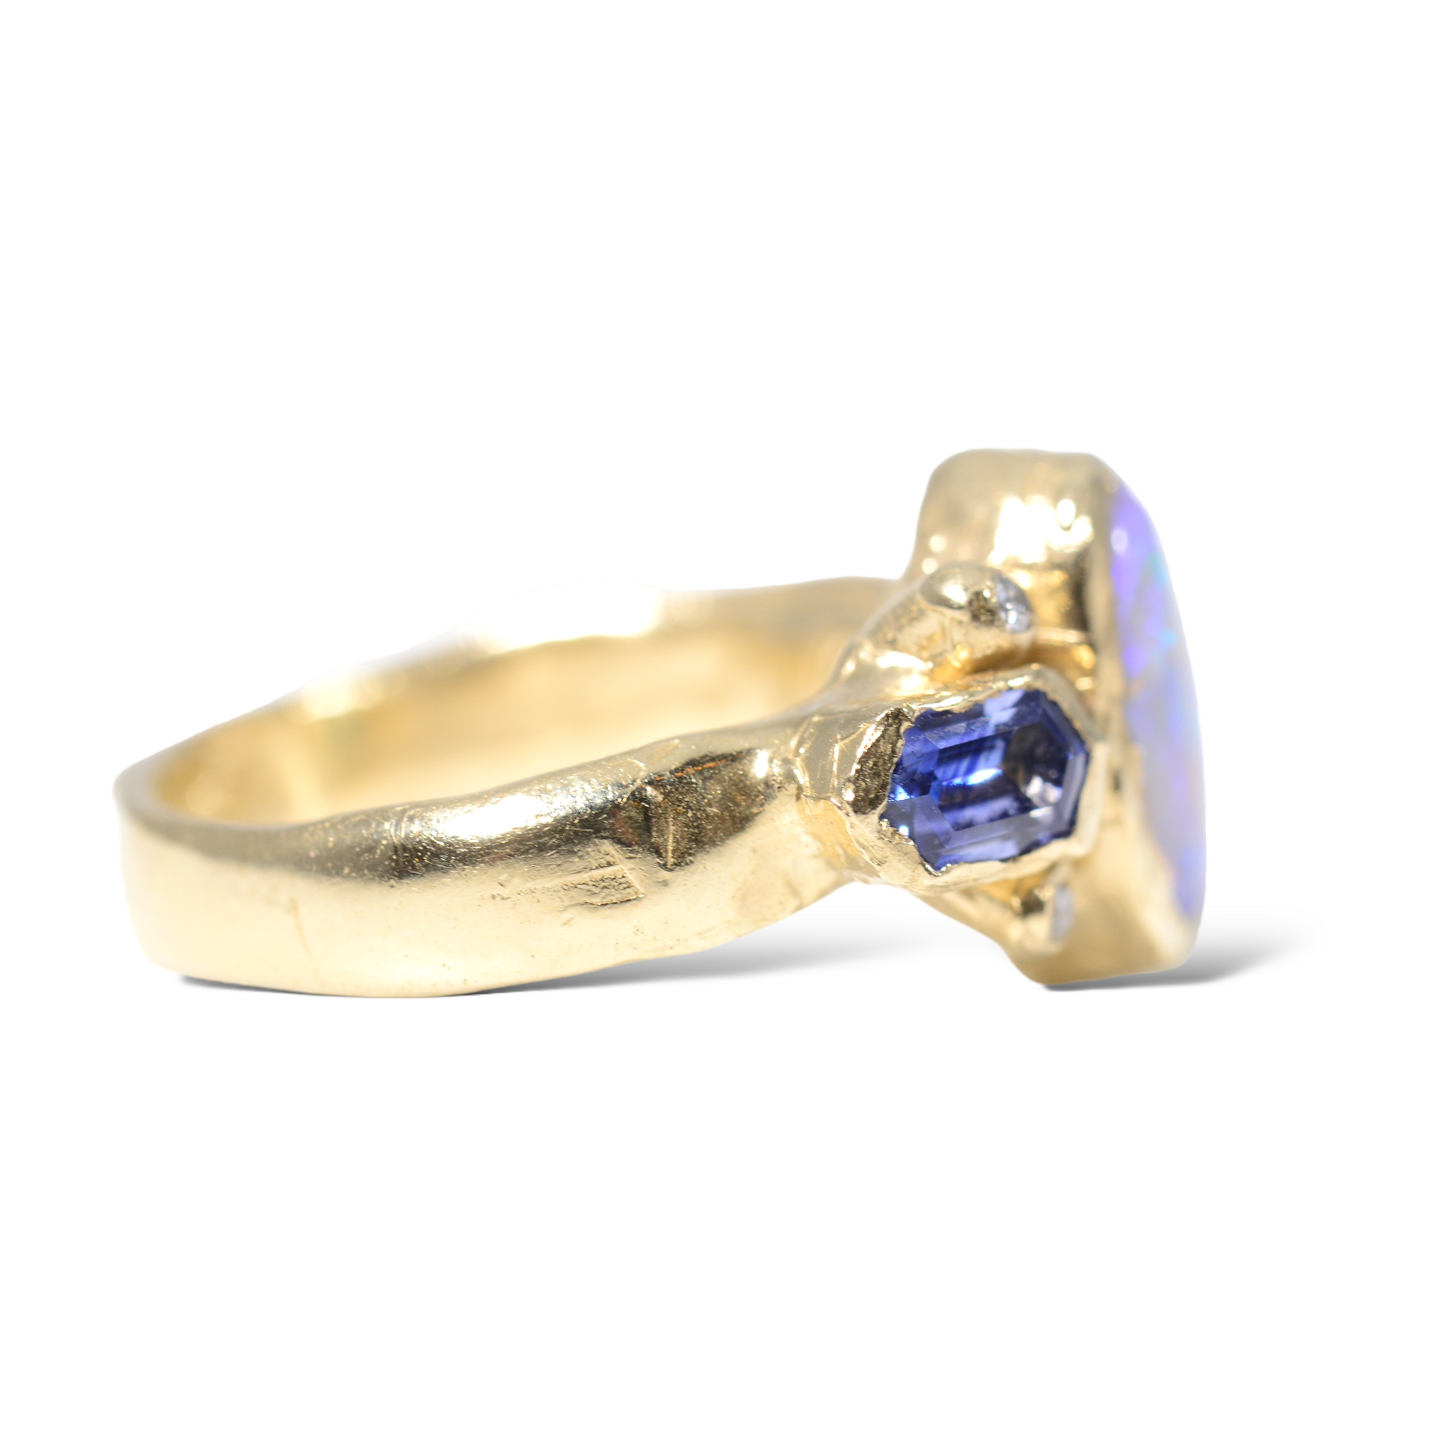 Majestic Opal Ring